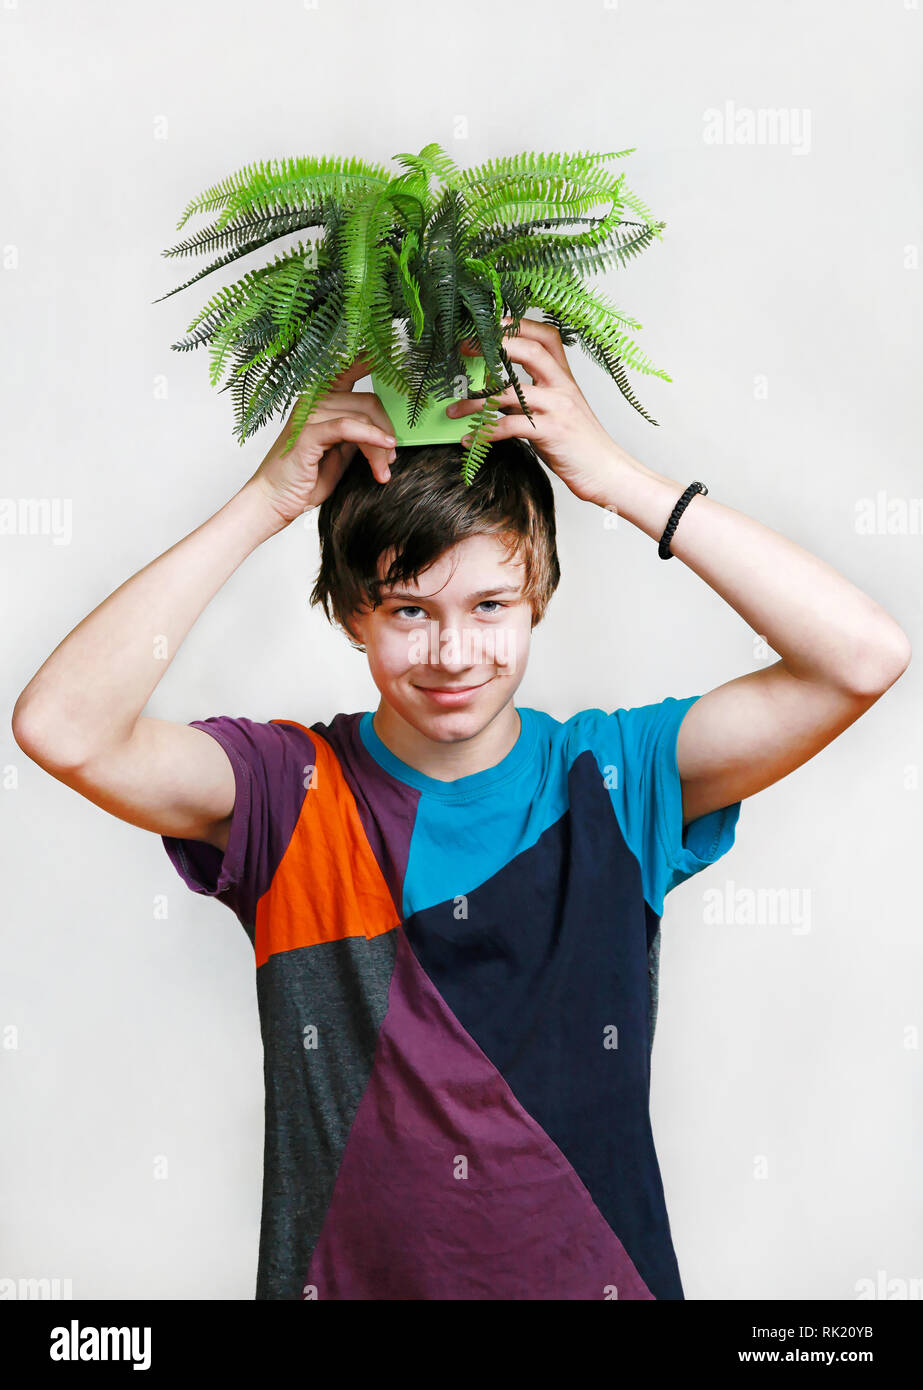 Teenage boy goofing around with plant at head Stock Photo